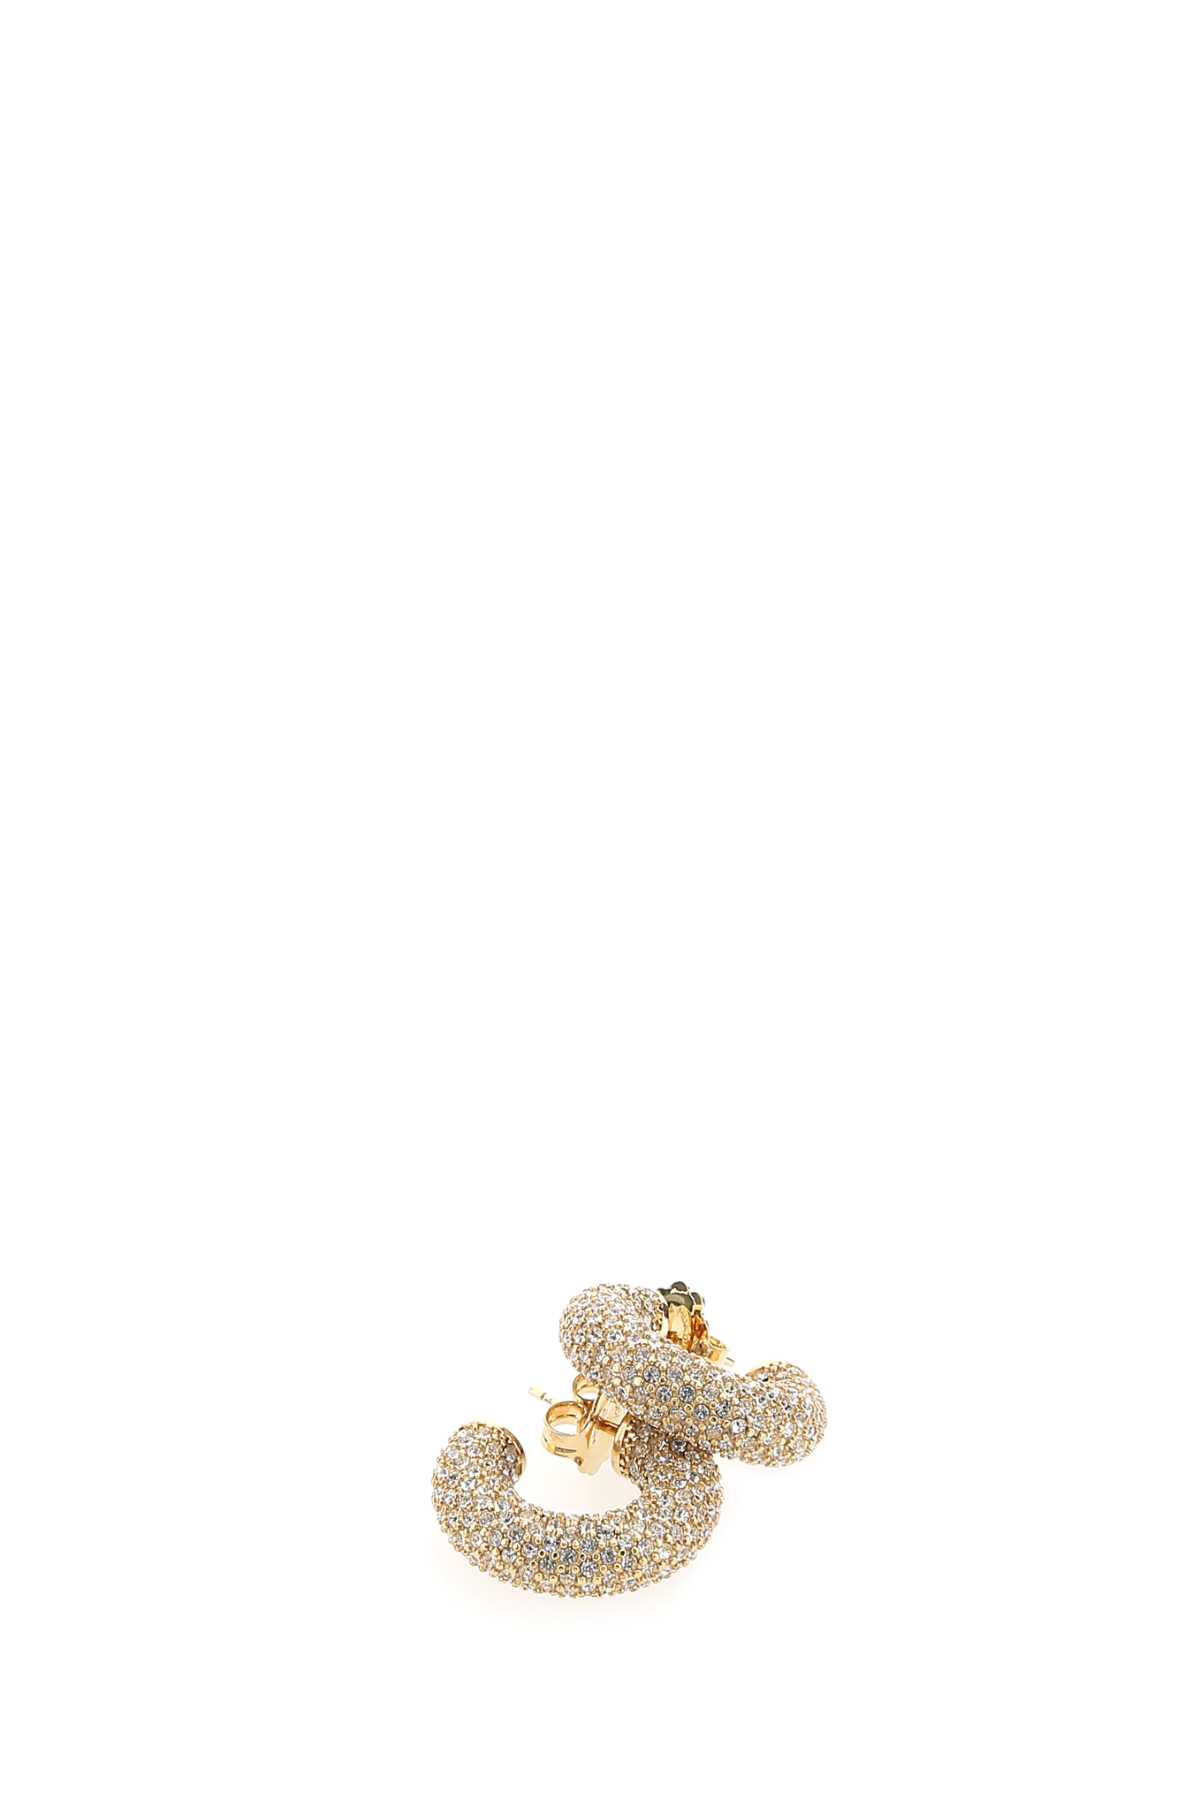 Amina Muaddi Embellished Metal Mini Cameron Earrings In White